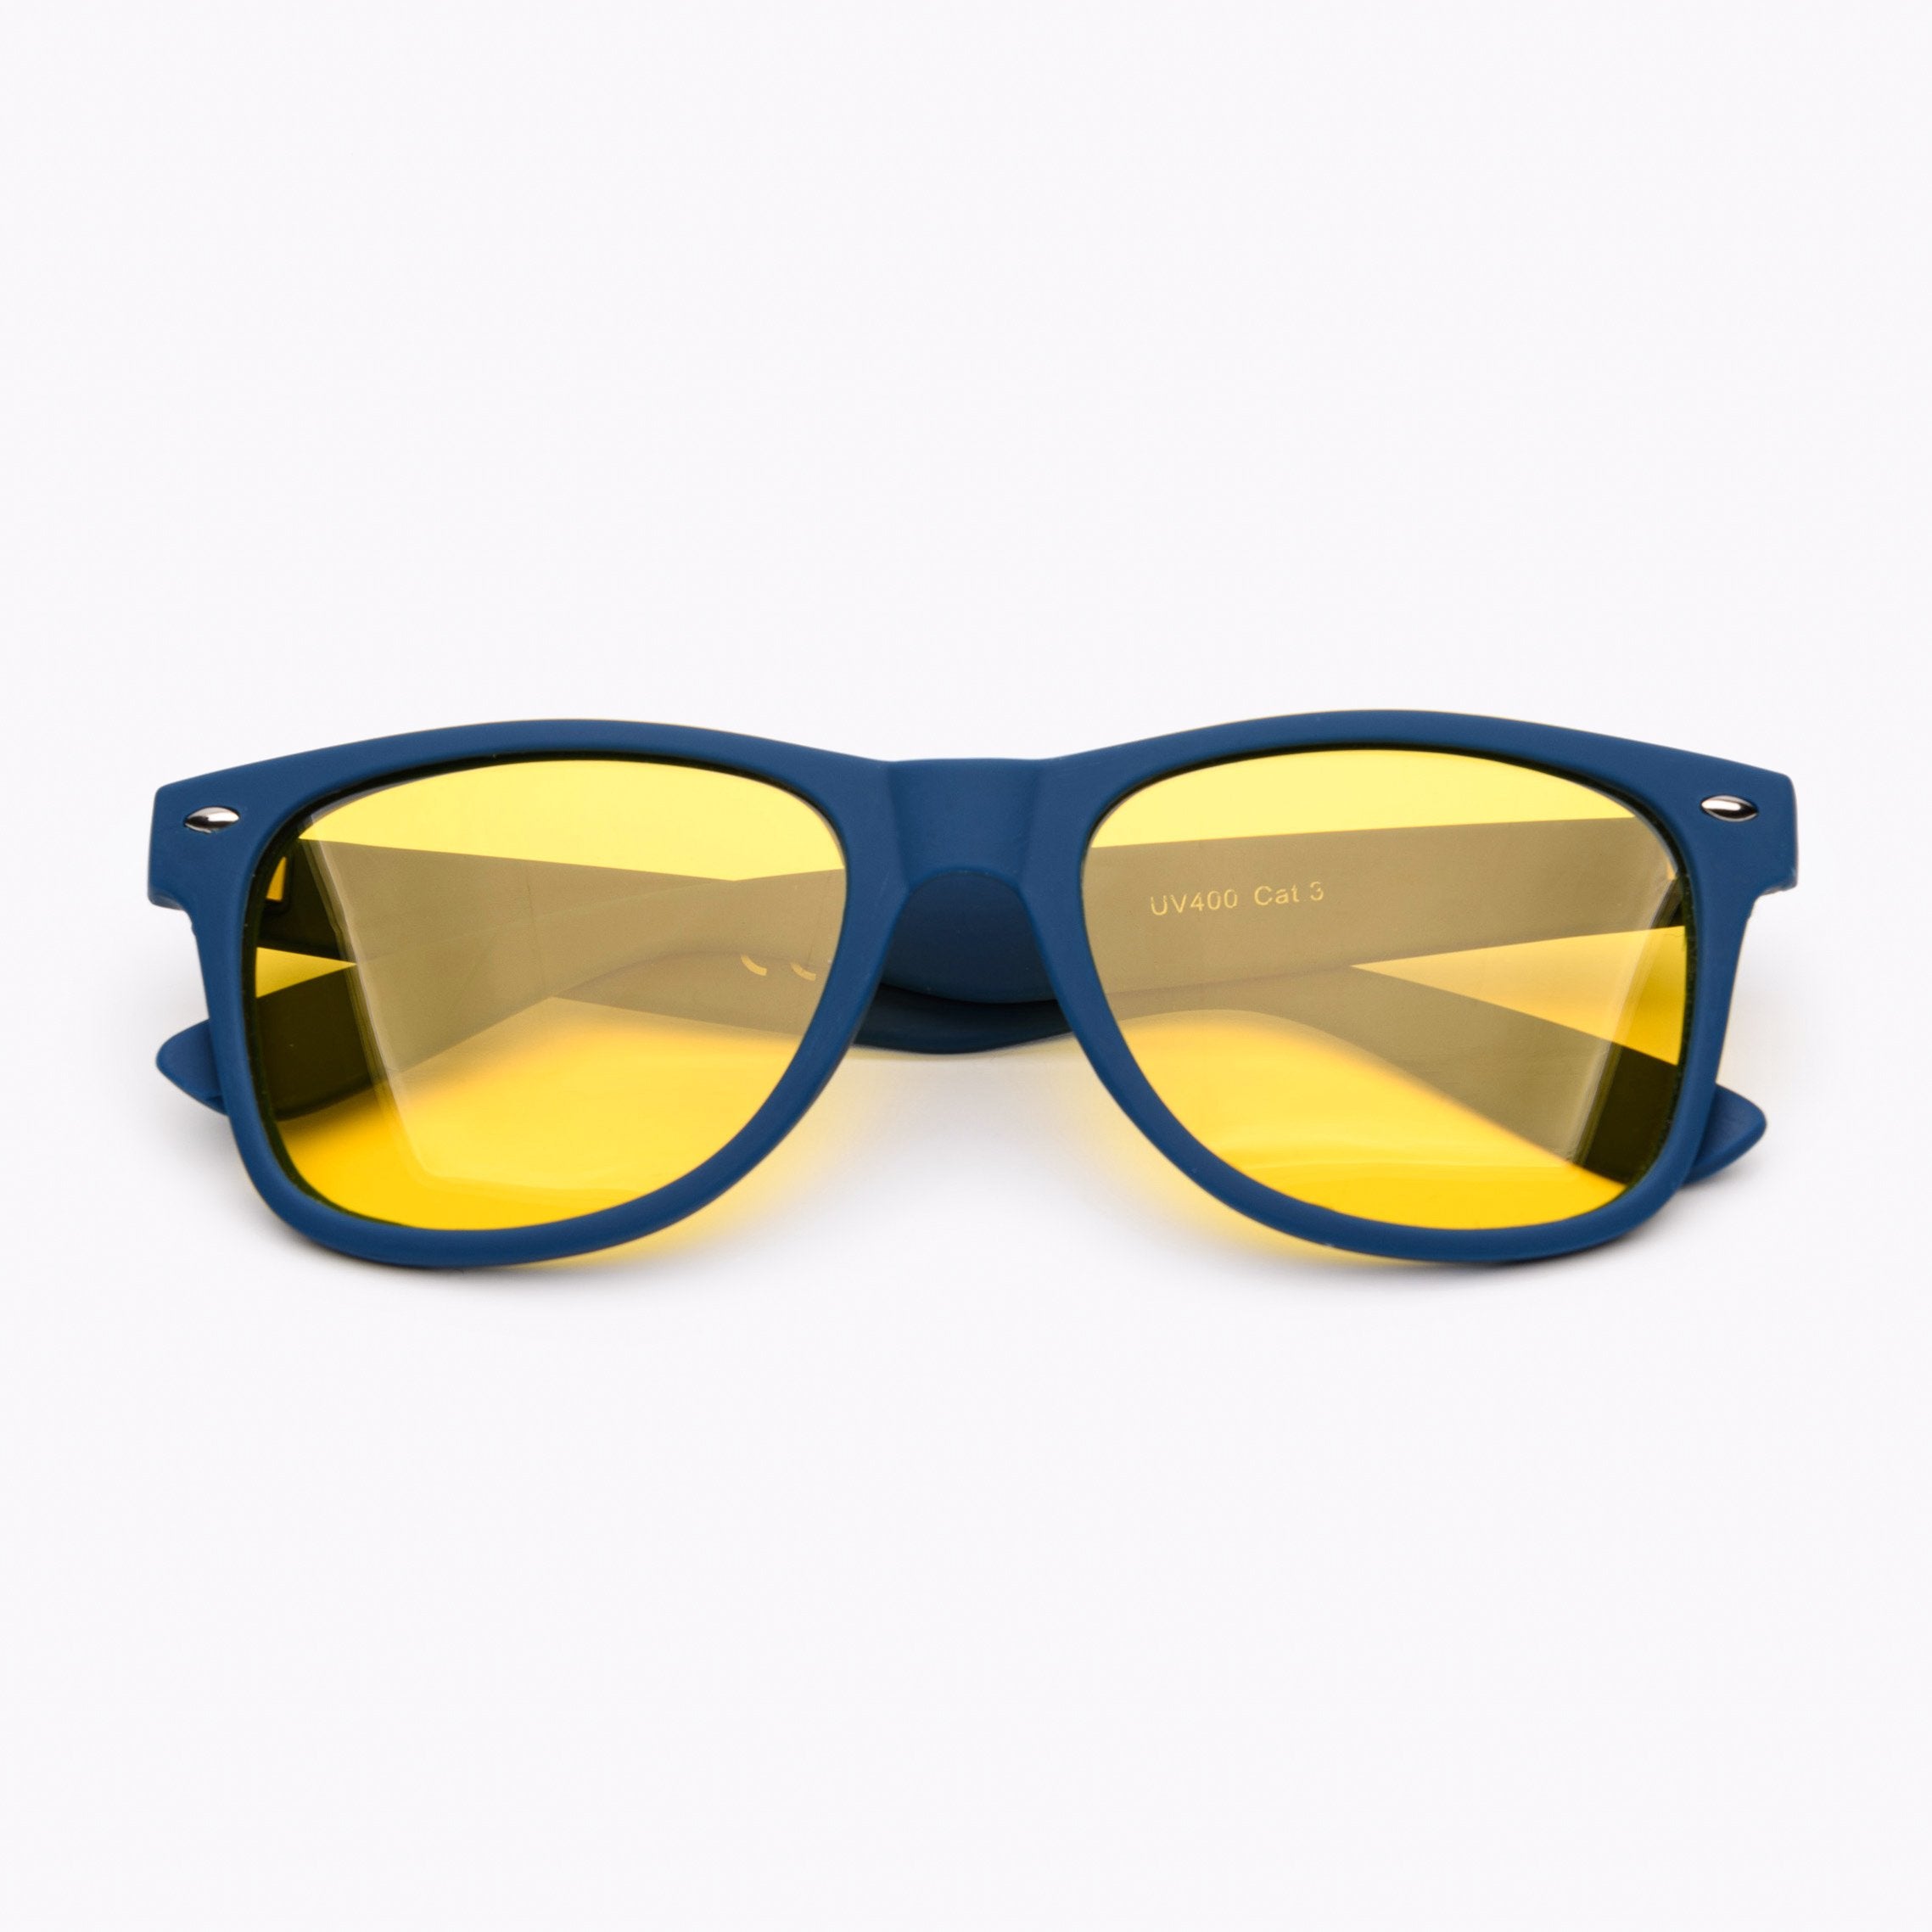 Blue wayfarer driving glasses